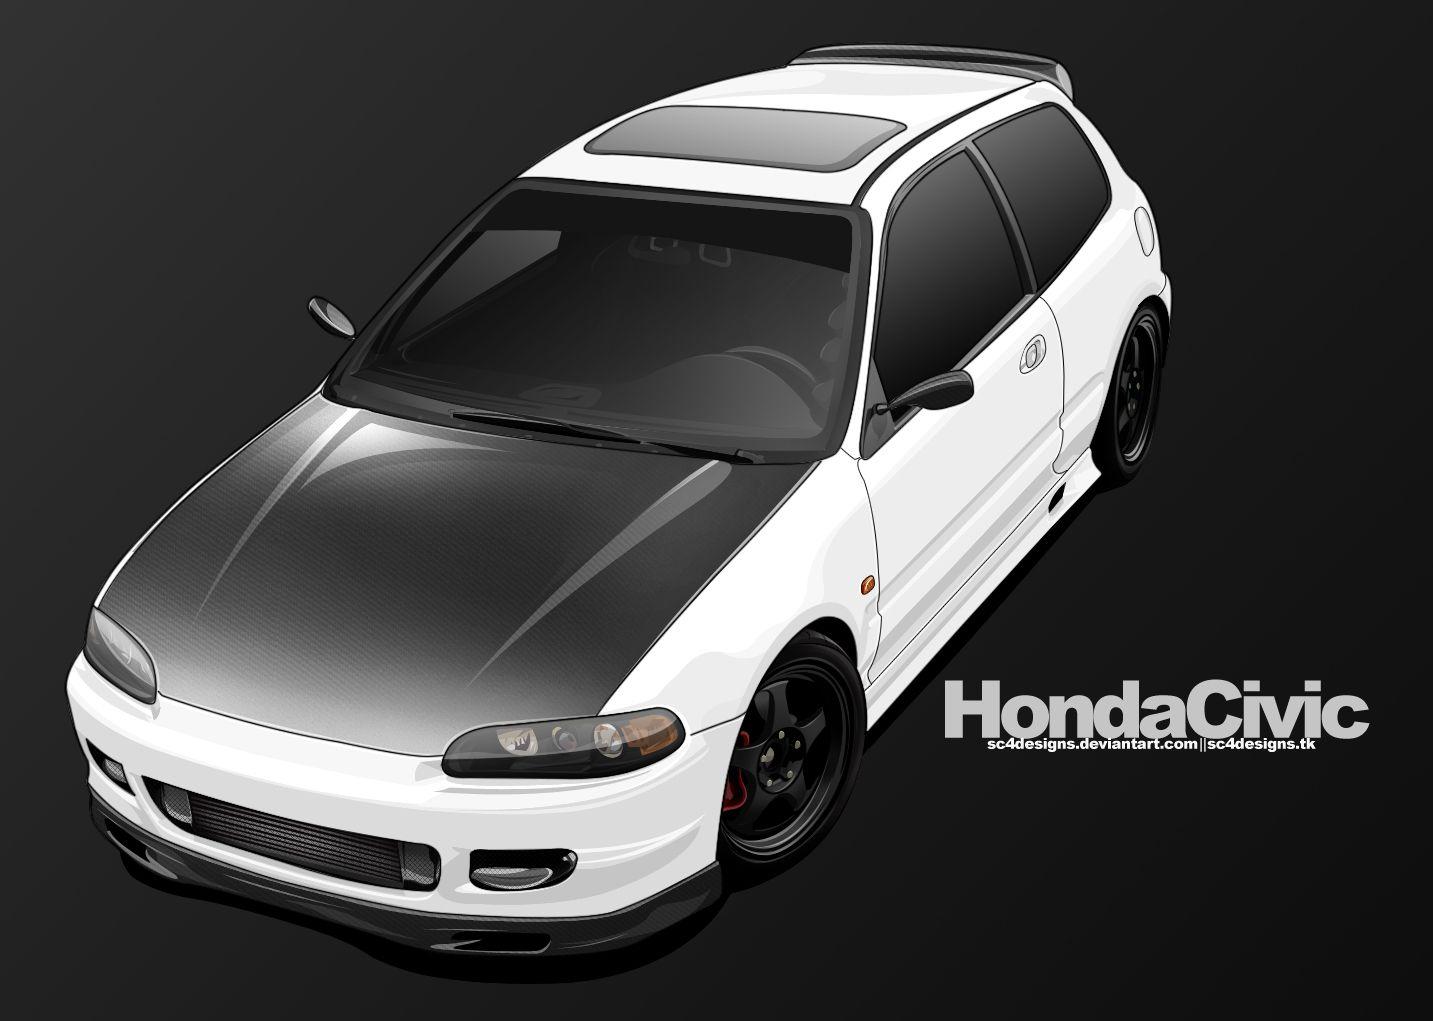 Honda Civic Eg6 Wallpaper